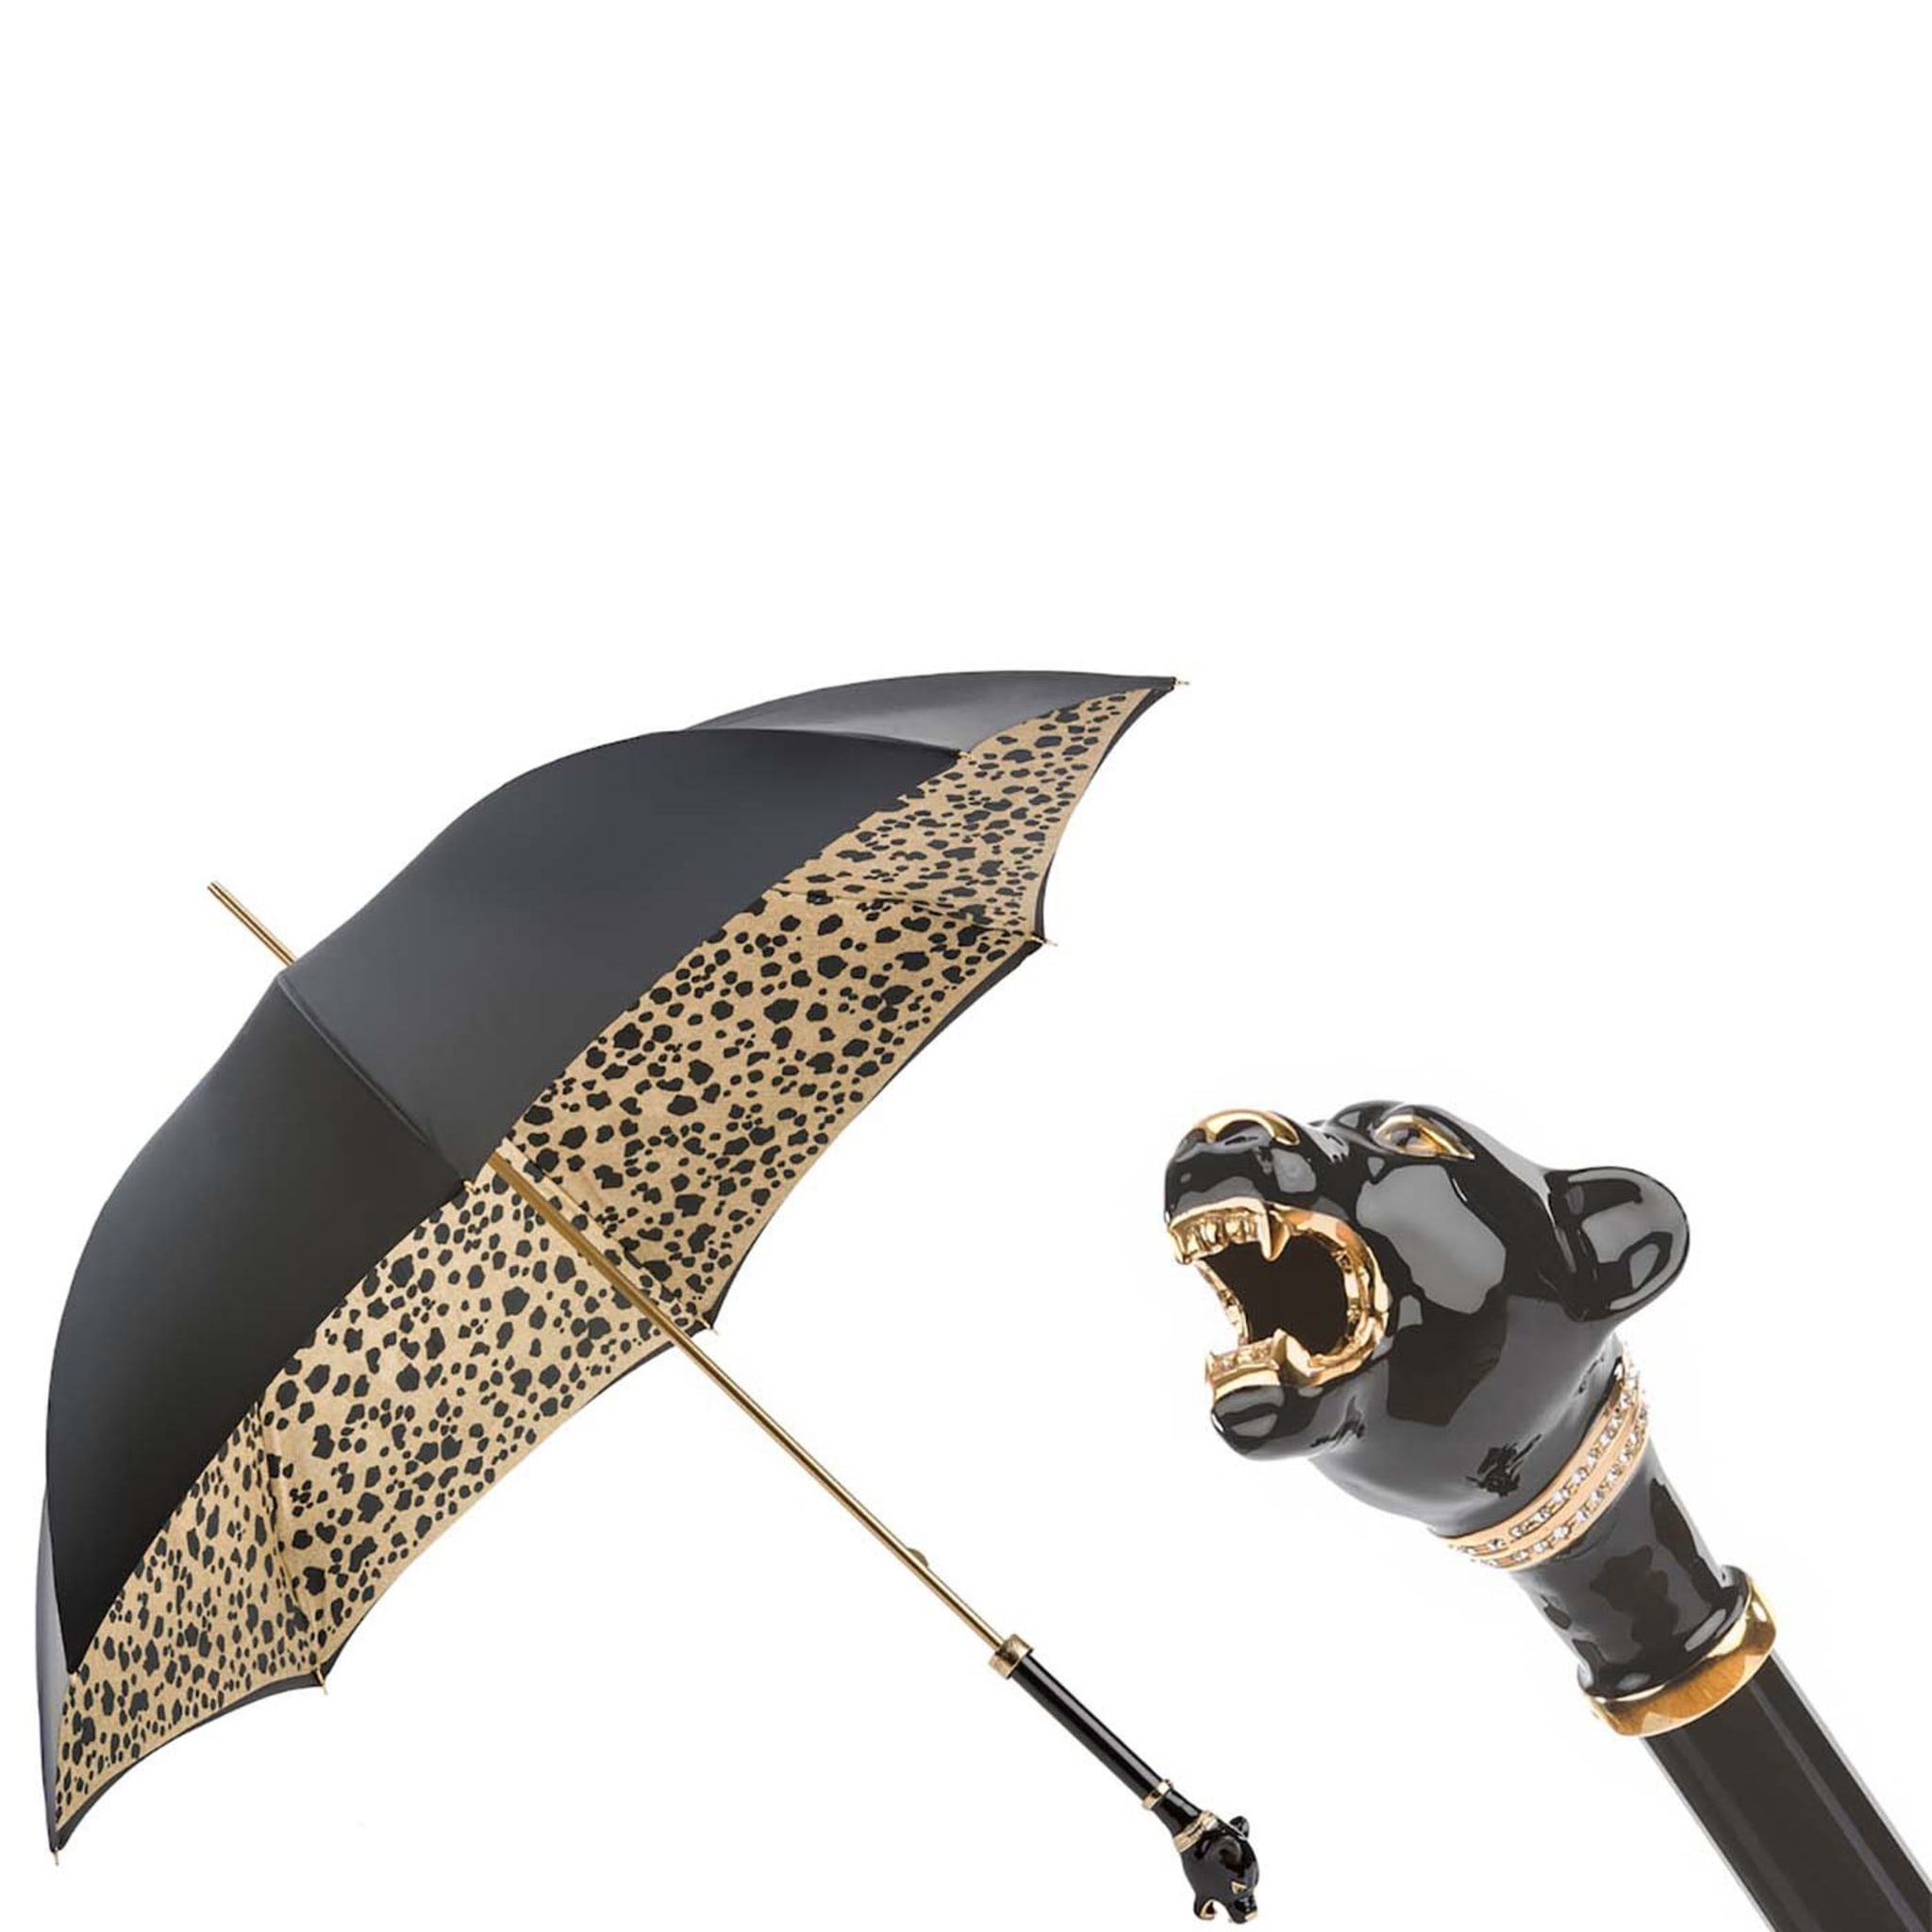 Black Umbrella with Black Panther Handle - Alternative view 1